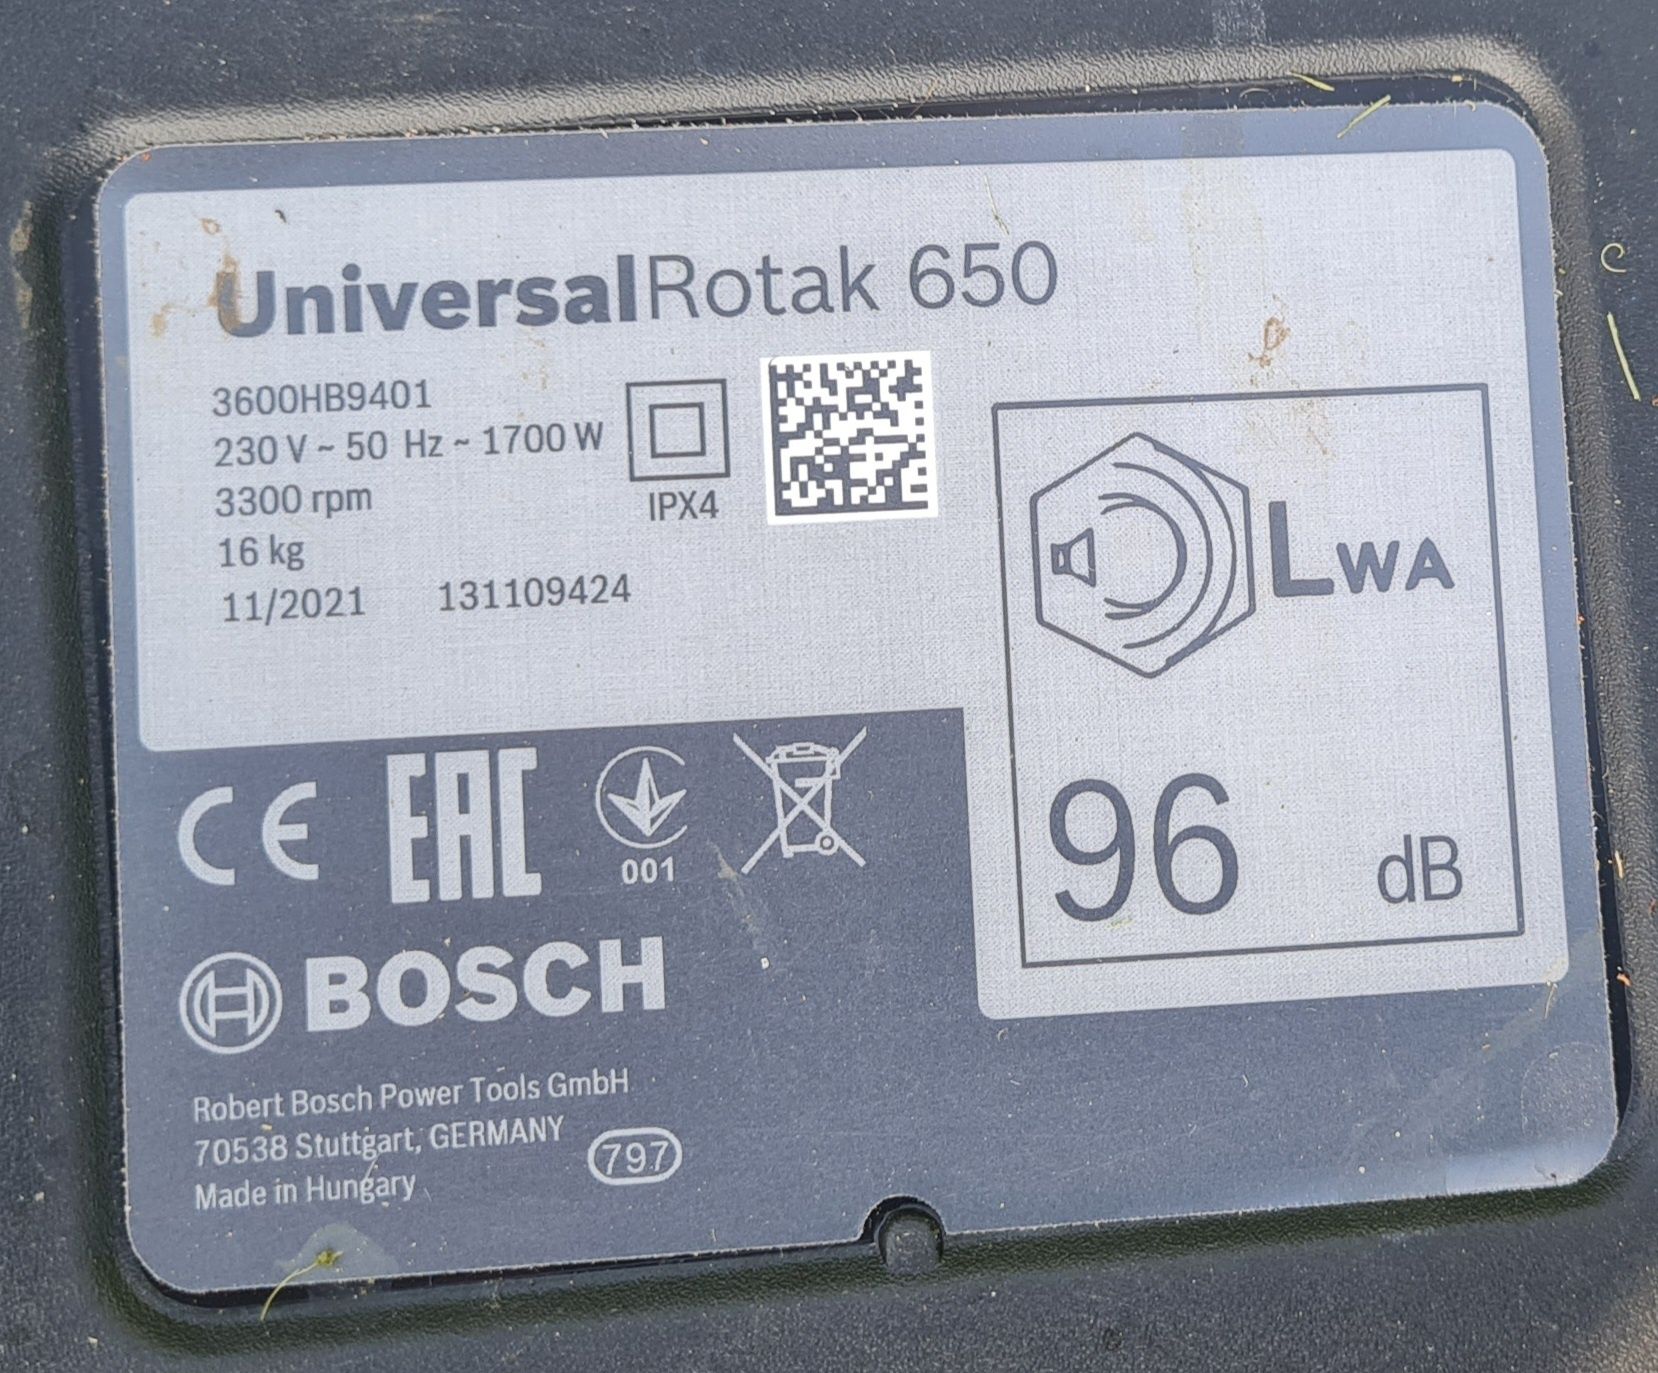 Kosiarka elektryczna Bosch Universal Rotak 650. Gwarancja producenta.